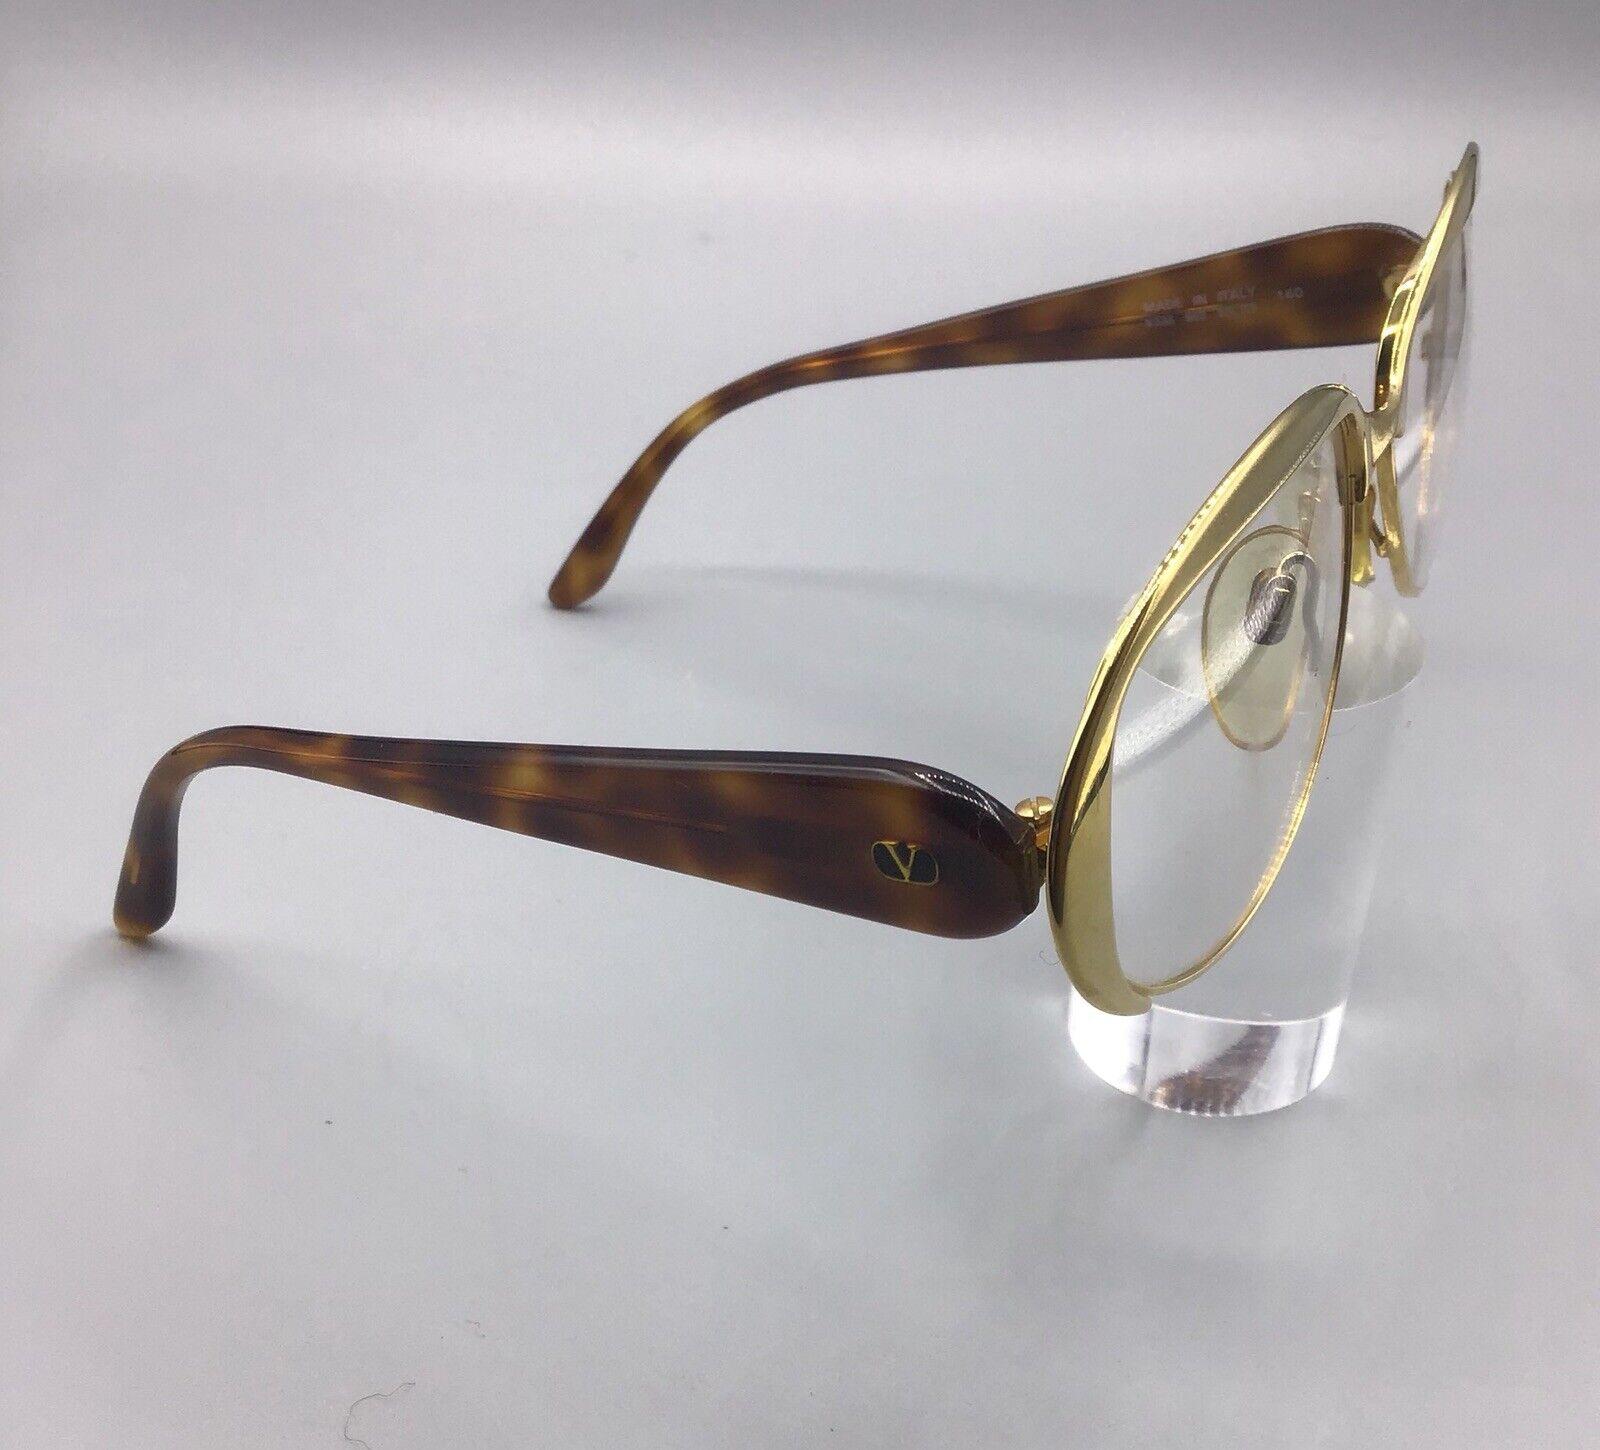 valentino occhiale vintage made italy v338 903 eyewear frame brillen lunettes